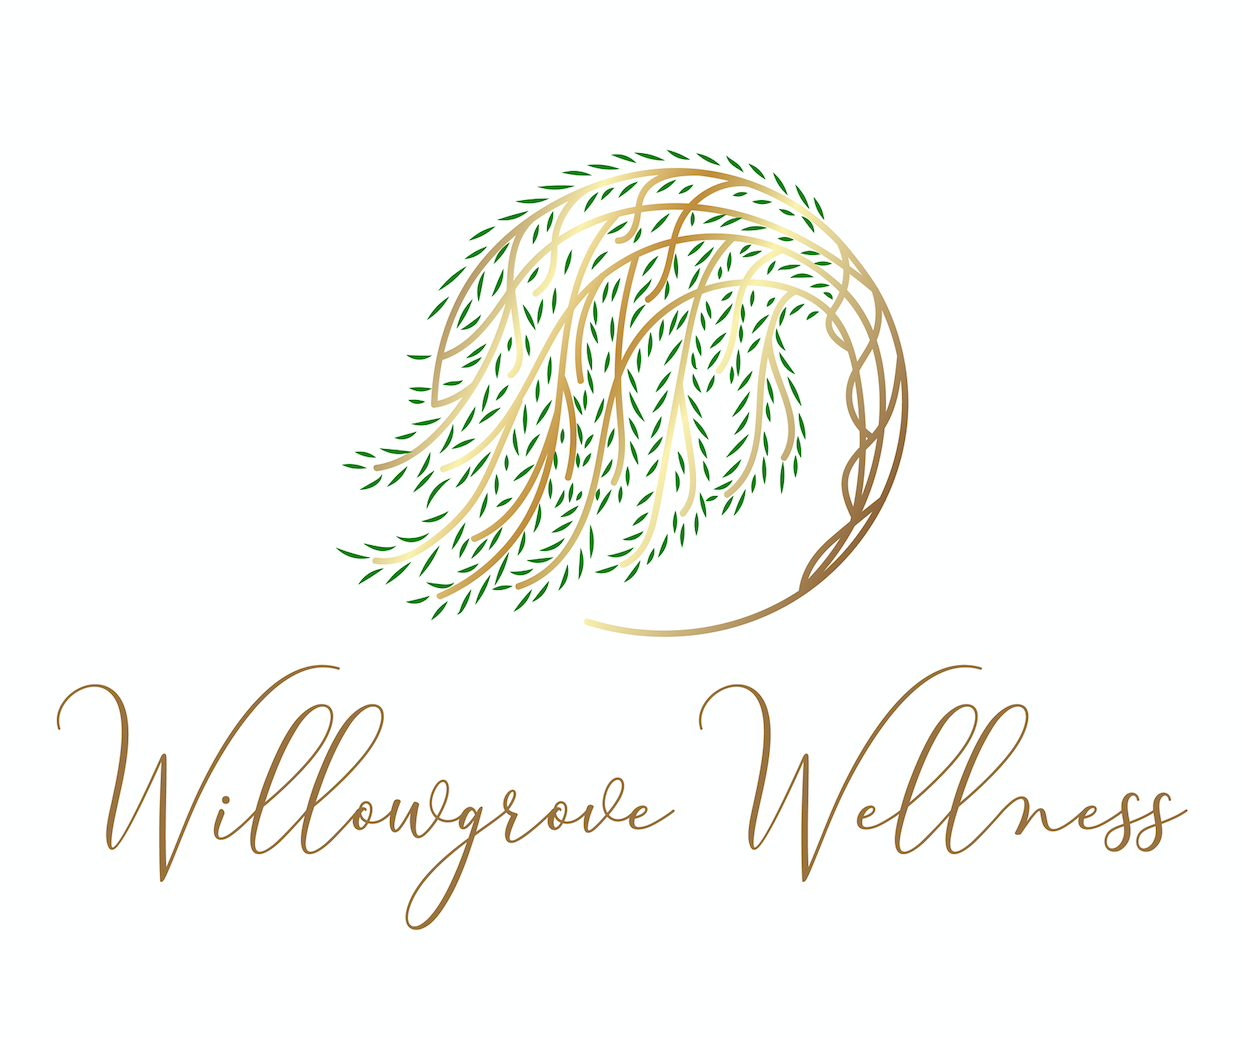 Willowgrove Wellness